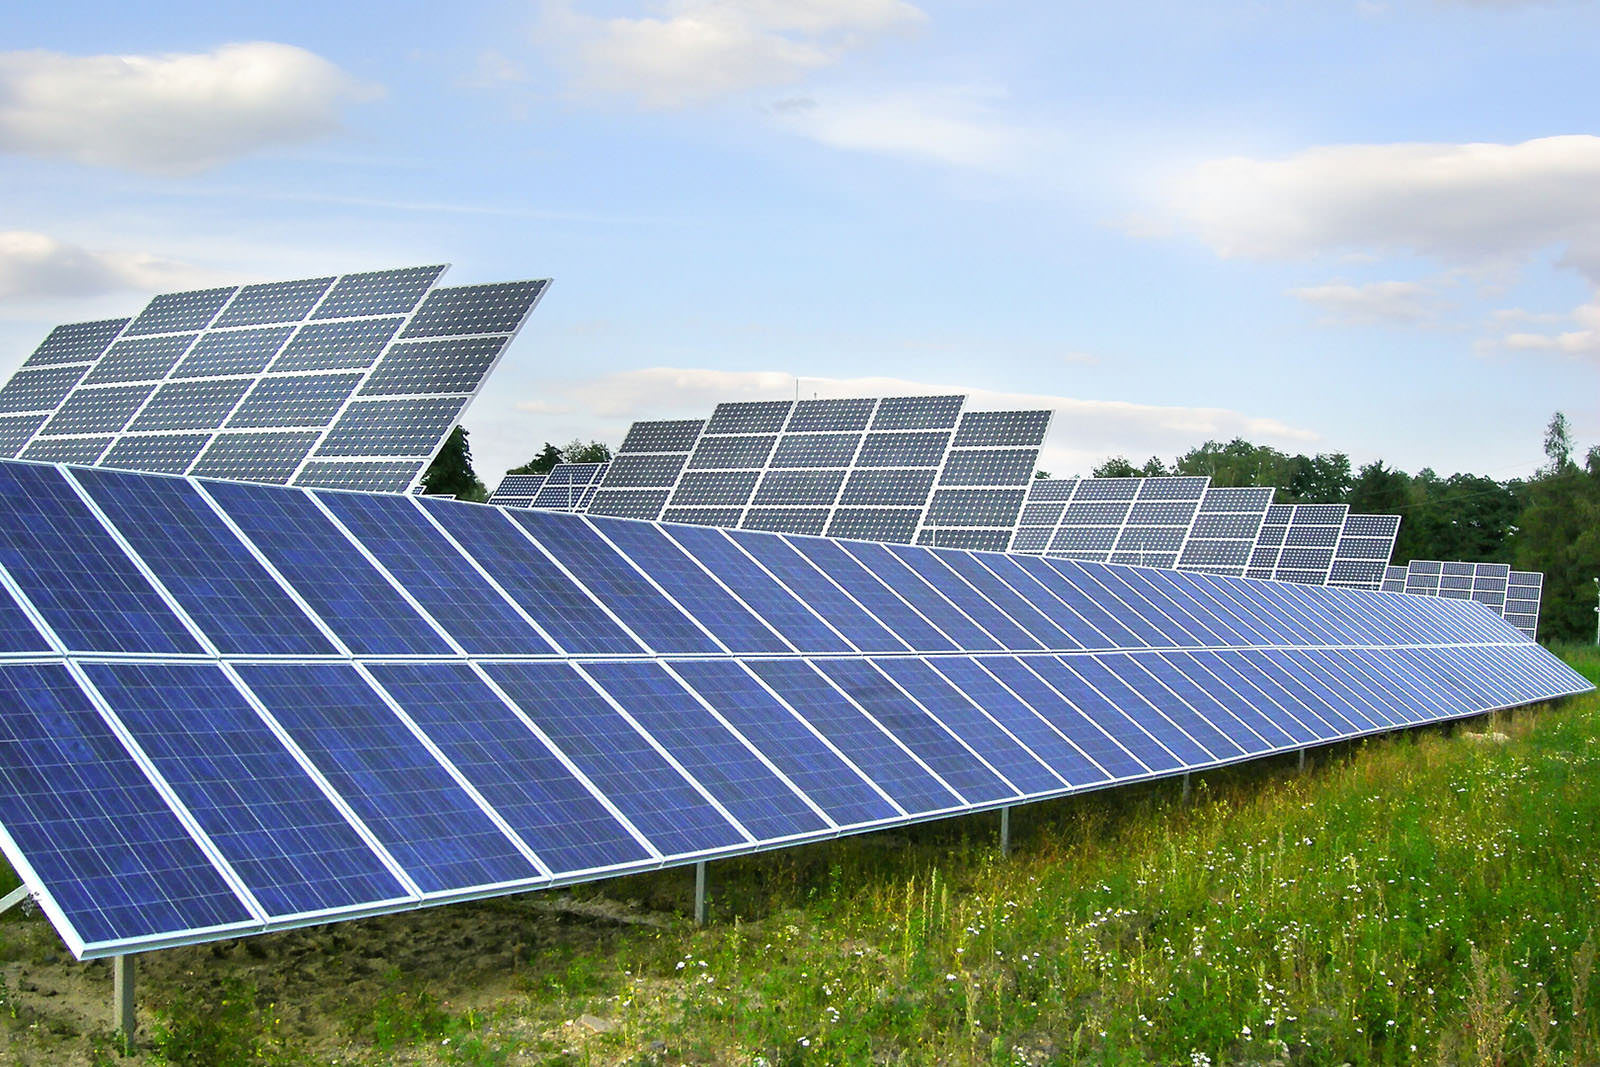 Ireland’s Largest Solar Farm Begins Construction